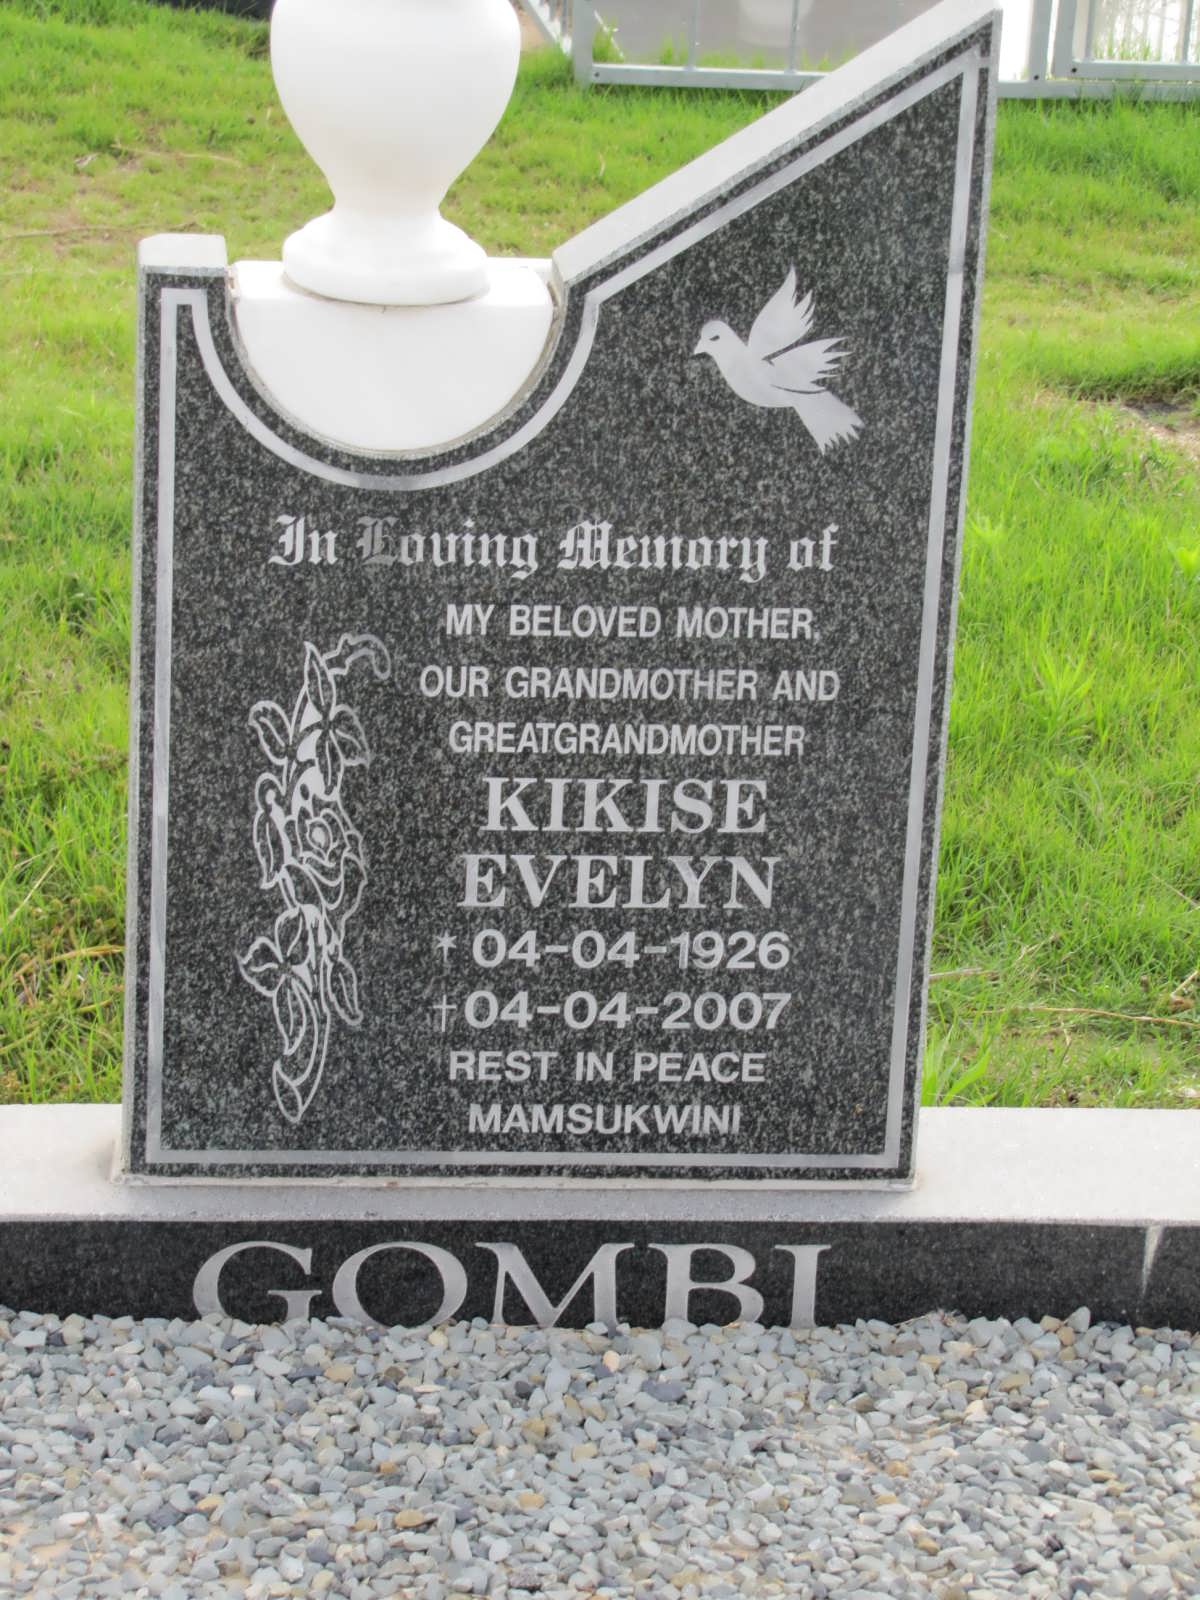 GOMBI Kikise Evelyn 1926-2007